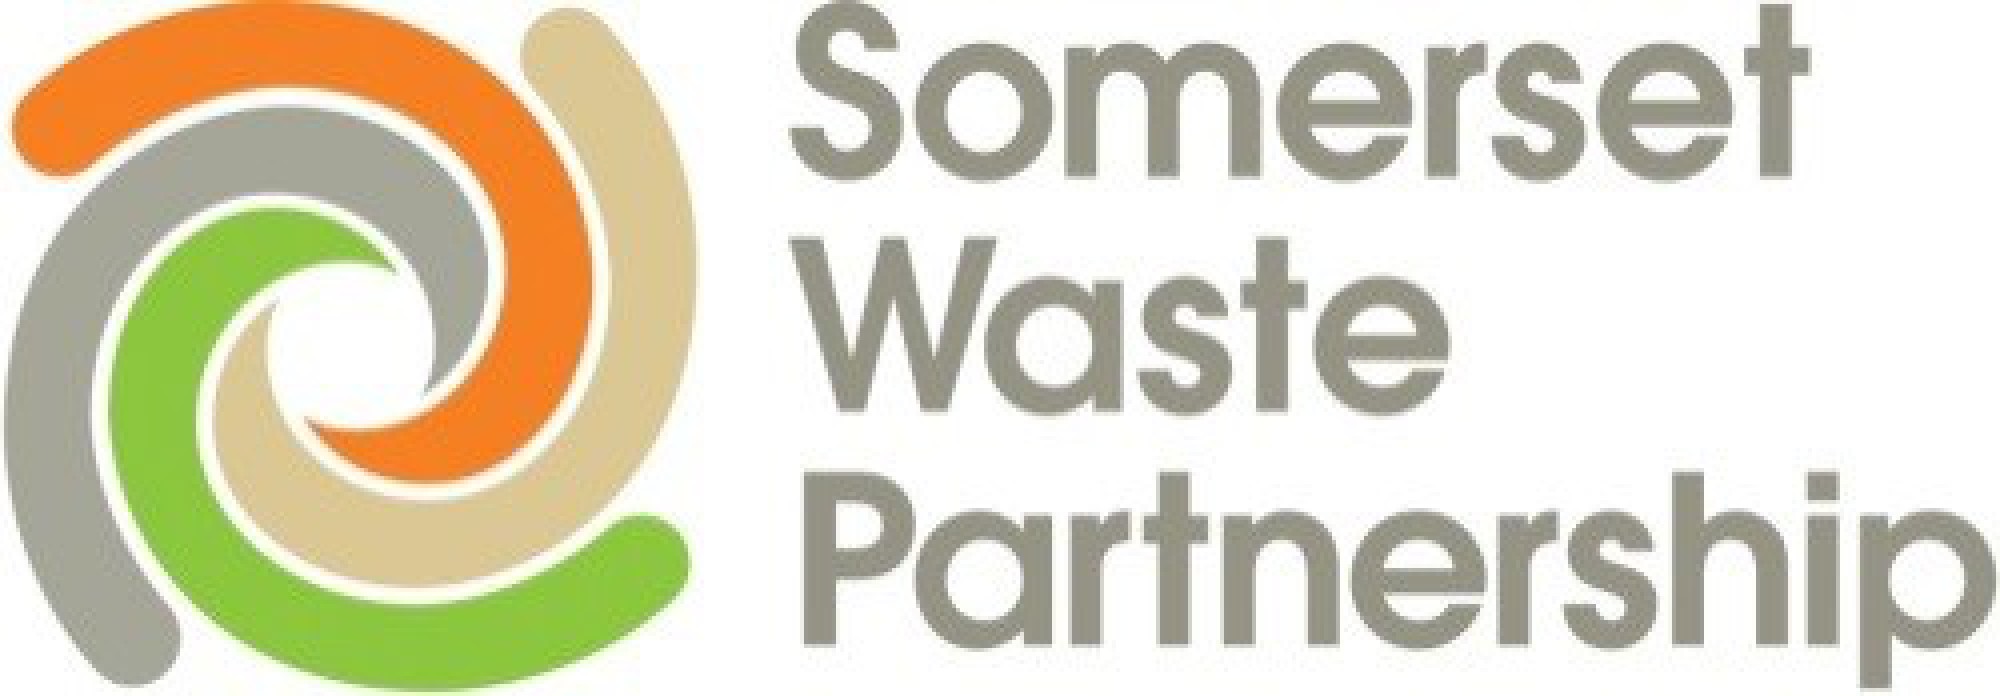 Somerset Waste Partnership update 12.8.21